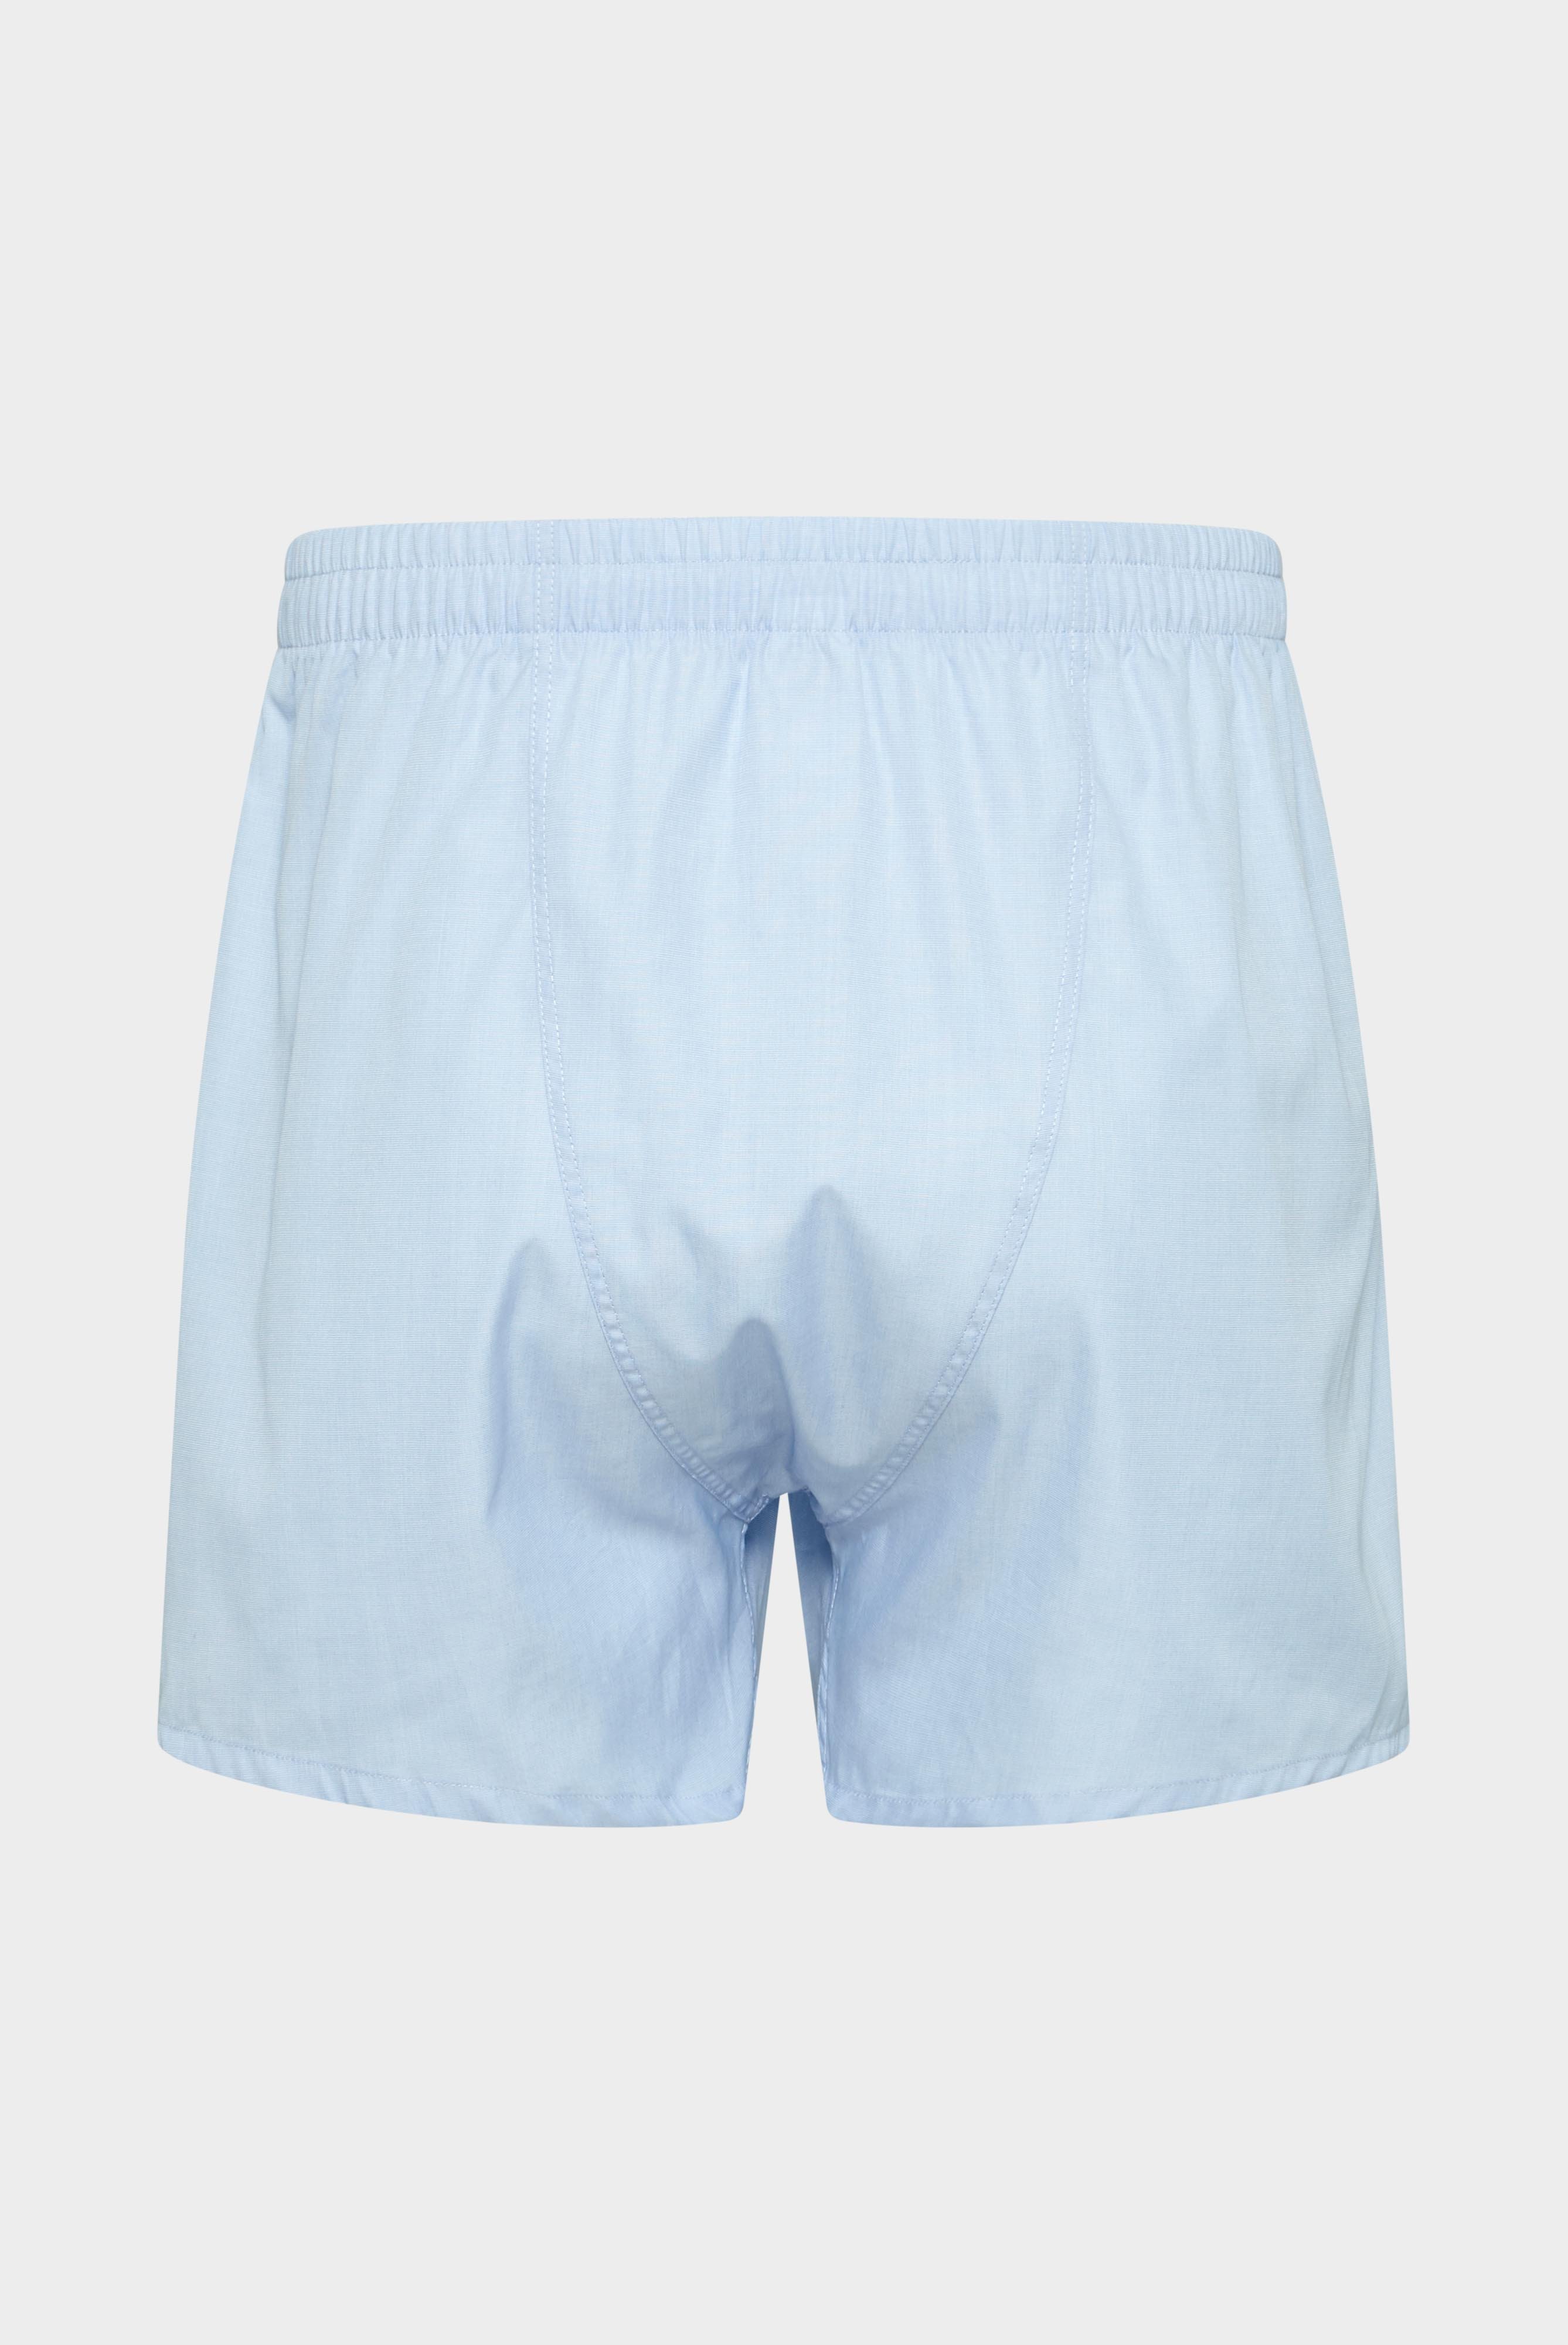 Underwear+Fil-a-Fil Boxer Shorts+91.1100..140766.720.46